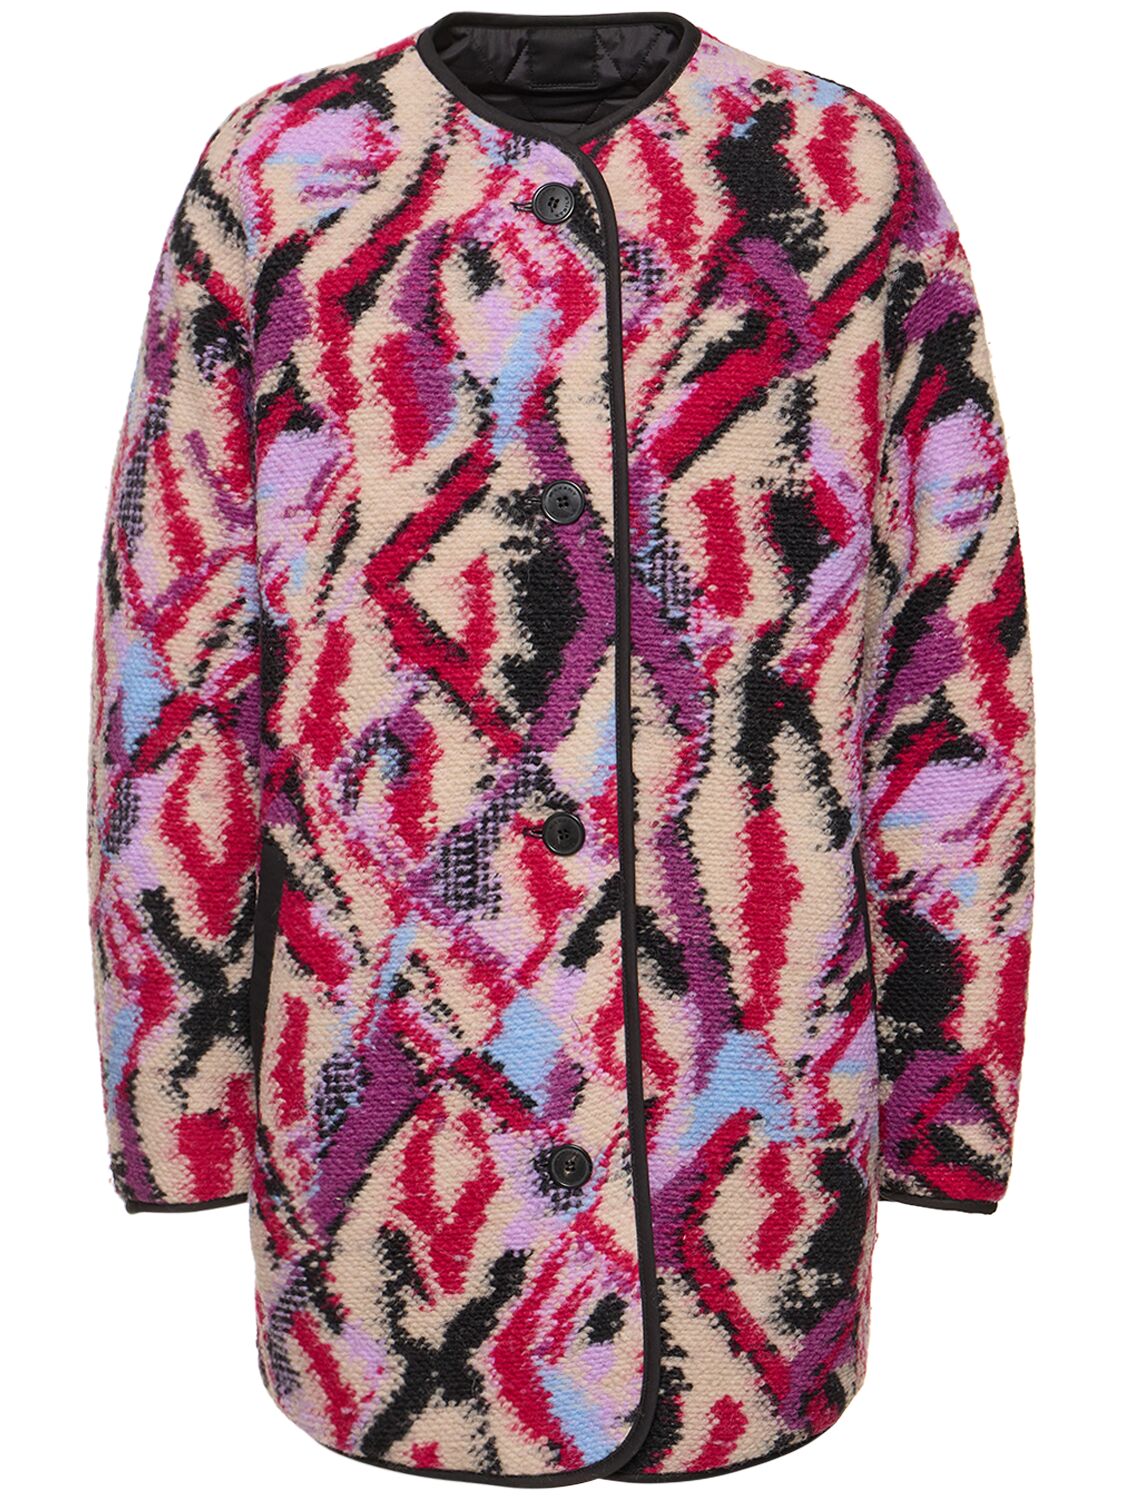 Image of Himemma Reversible Wool Blend Jacket